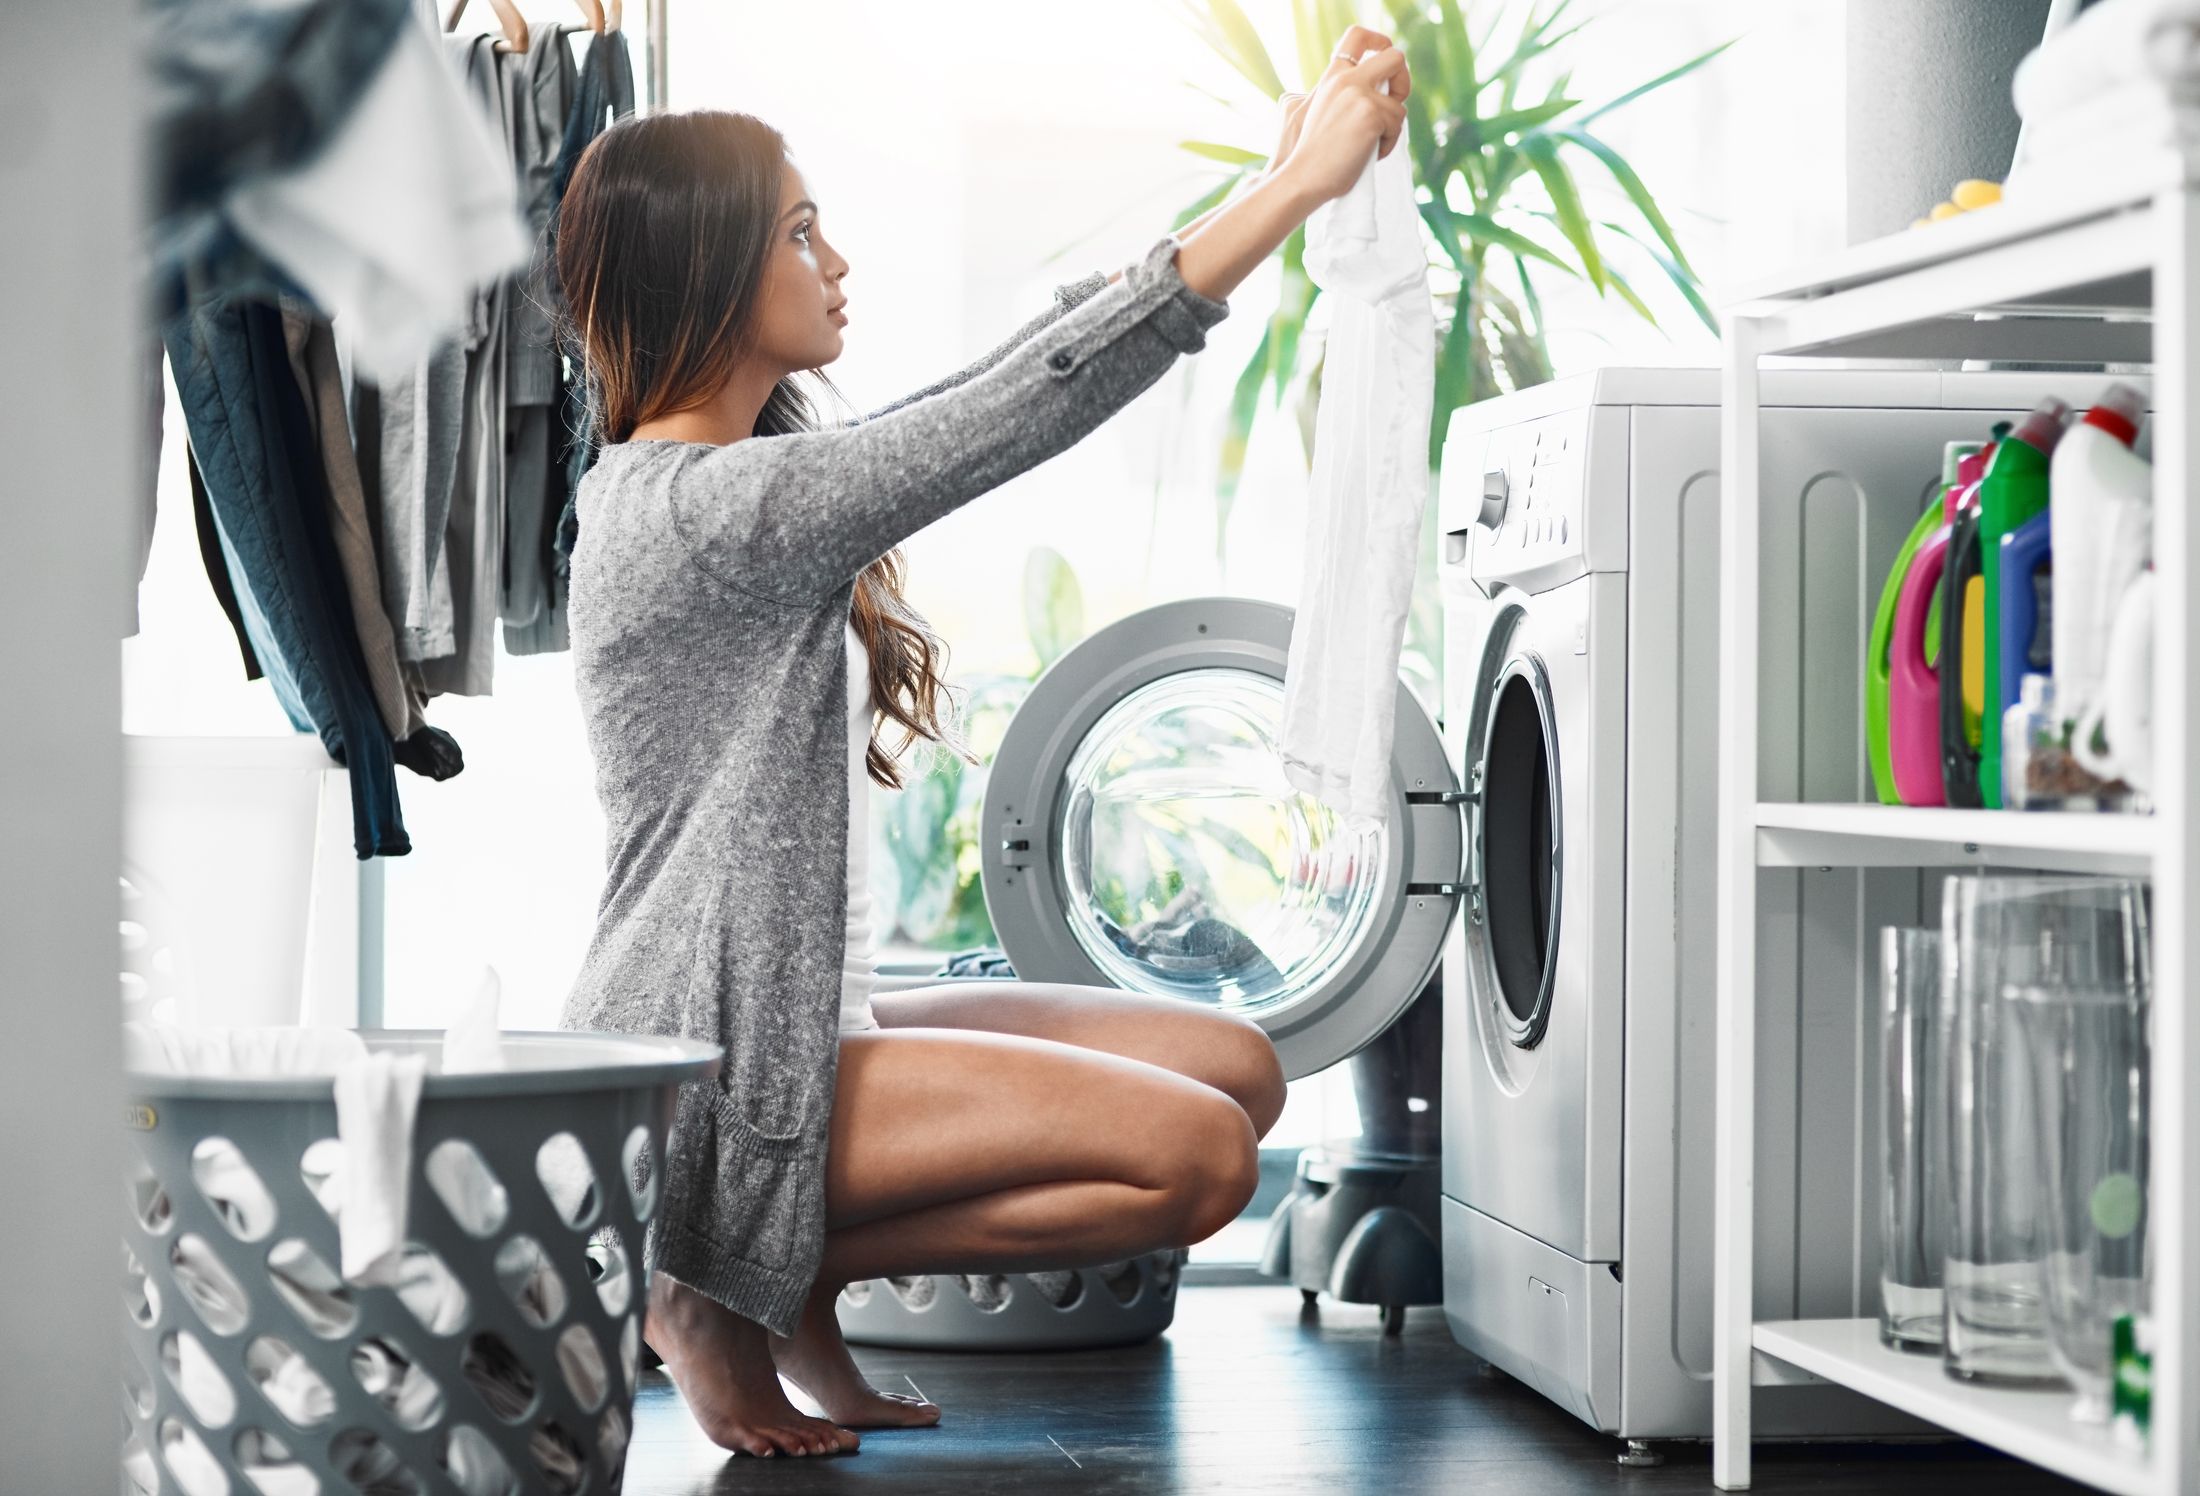 should you wash new clothes